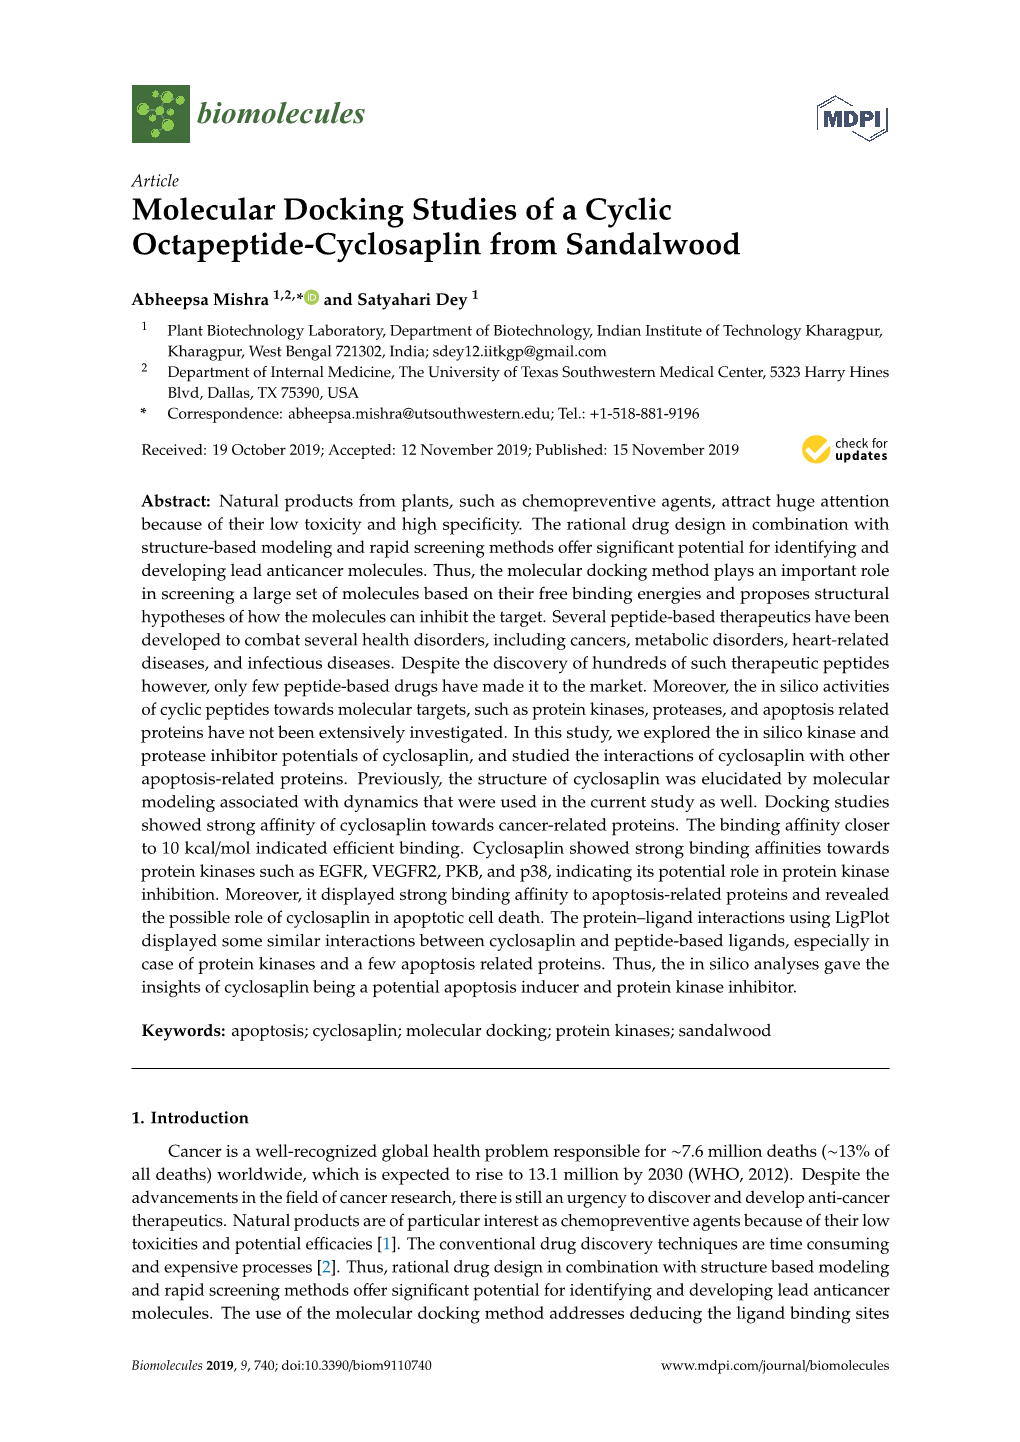 Molecular Docking Studies of a Cyclic Octapeptide-Cyclosaplin from Sandalwood